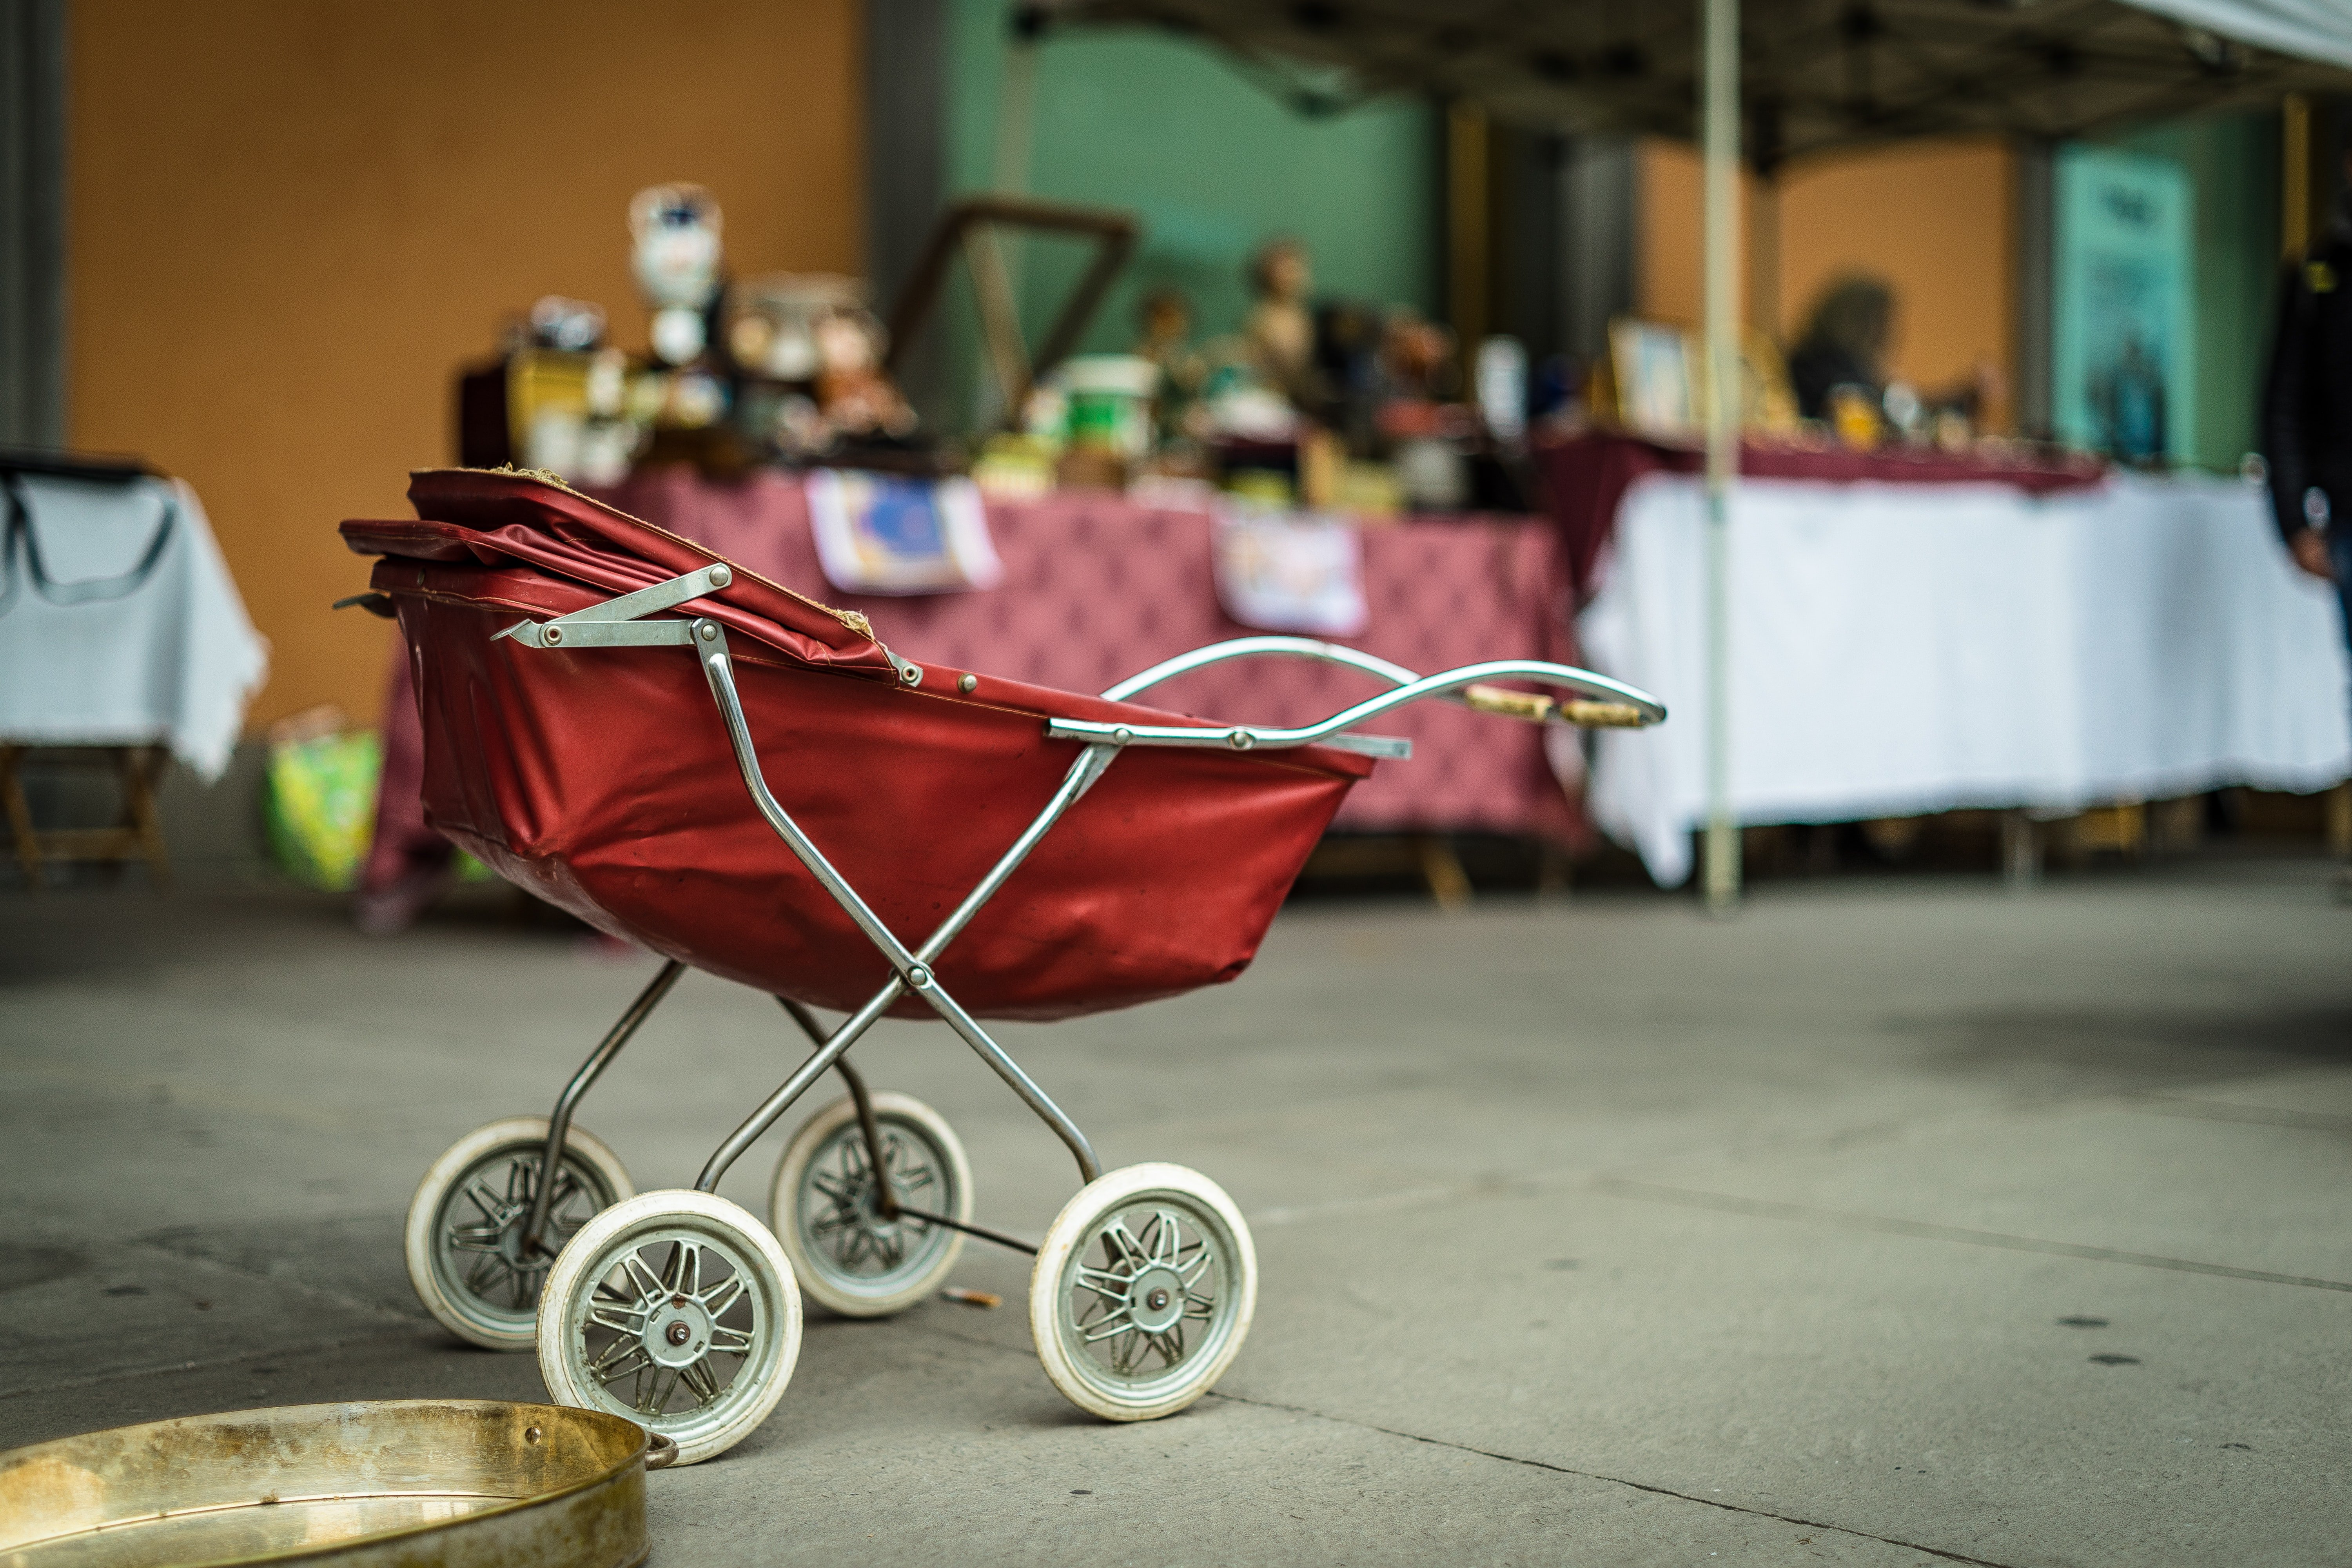 Anne sold her beautiful vintage stroller in the flea market. | Source: Unsplash